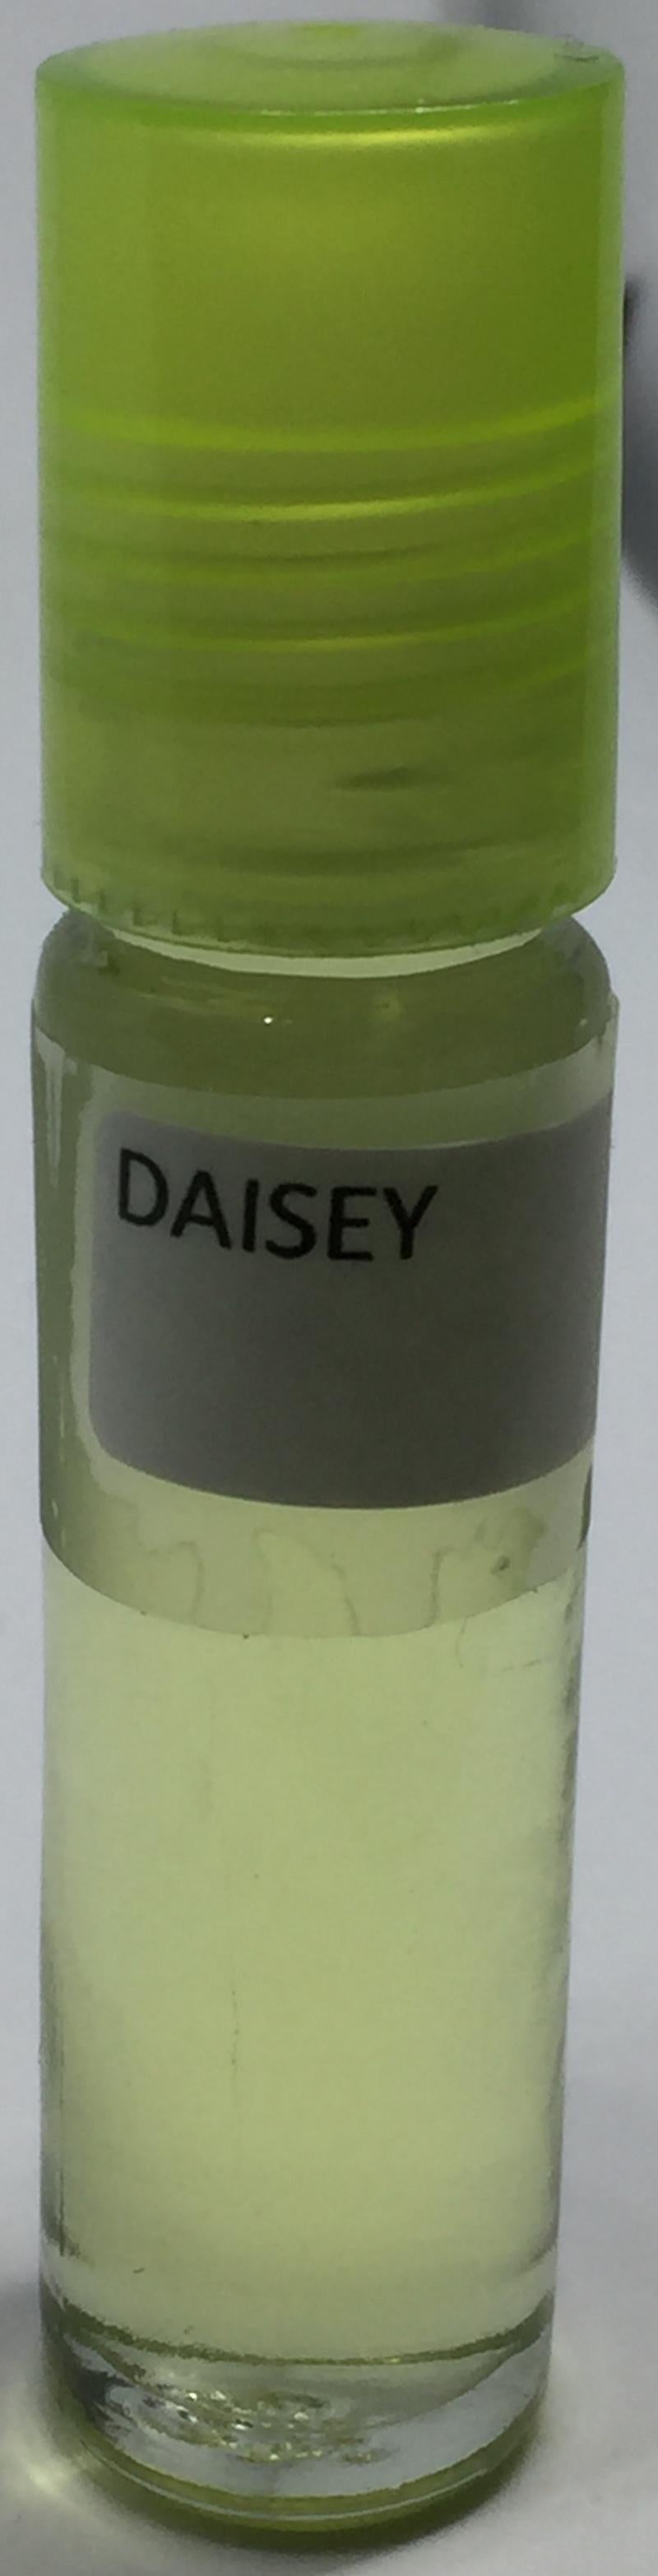 Daisey Type: Fragrance (Perfume)Body Oil Women